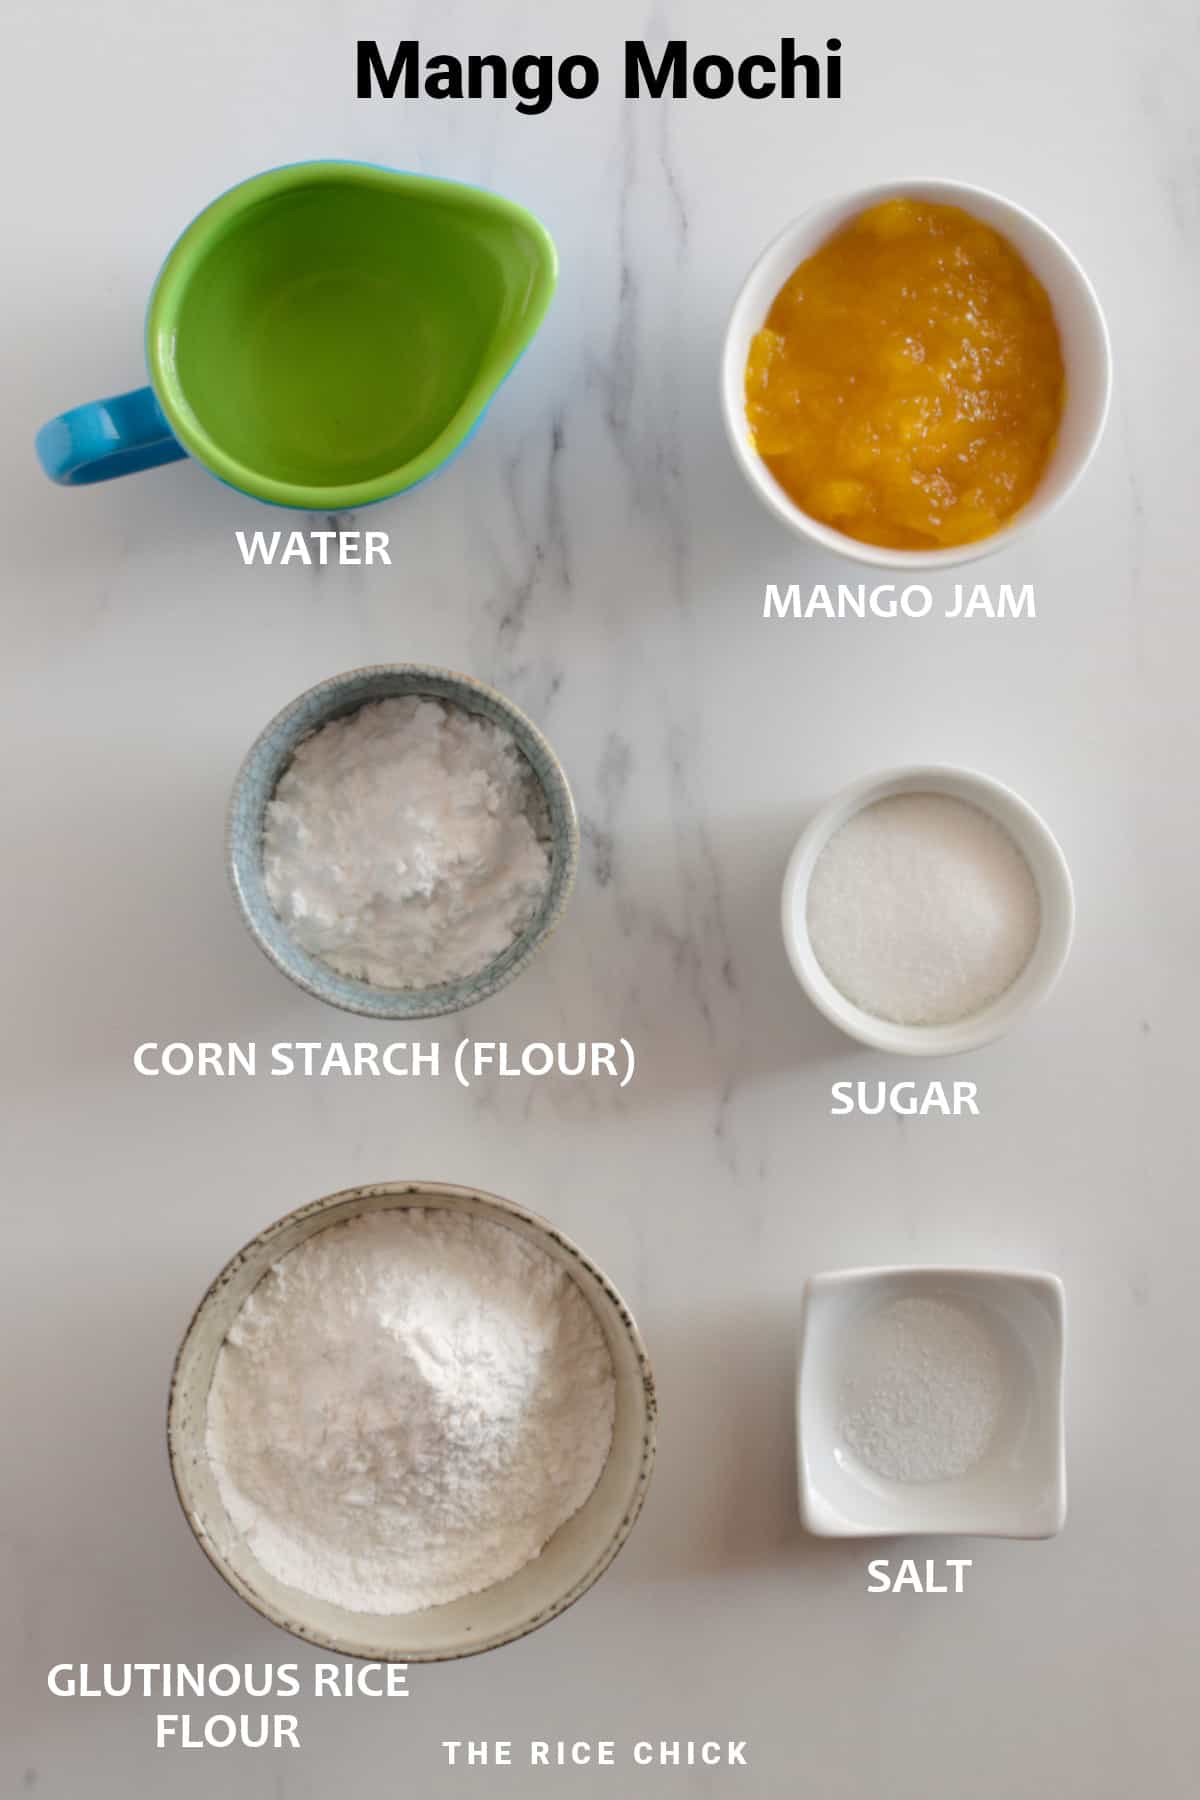 Ingredients for mango mochi.